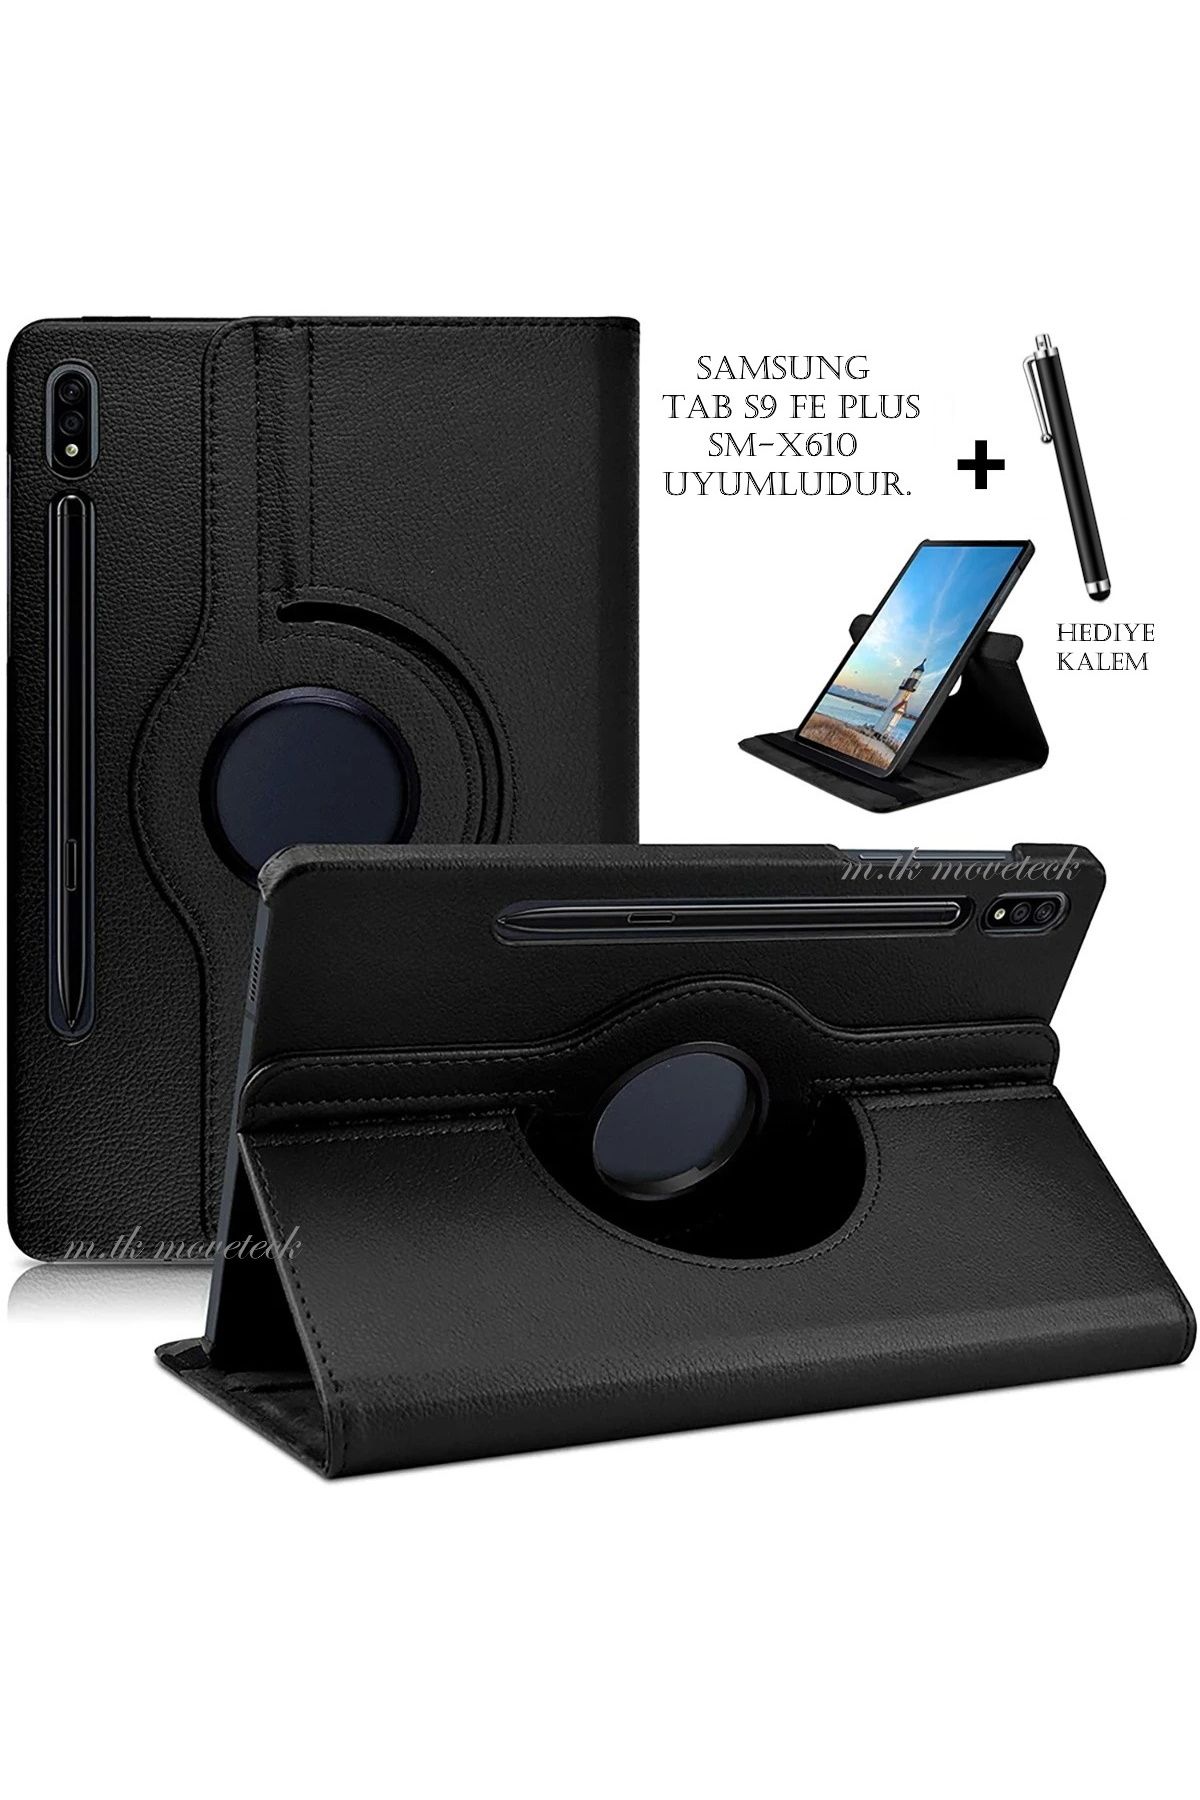 m.tk moveteck Samsung Galaxy Tab S9 Fe Plus 12.4 inç Sm-X610 Kılıf 360 Dönen Kapaklı Standlı Tablet ve Kalem Set